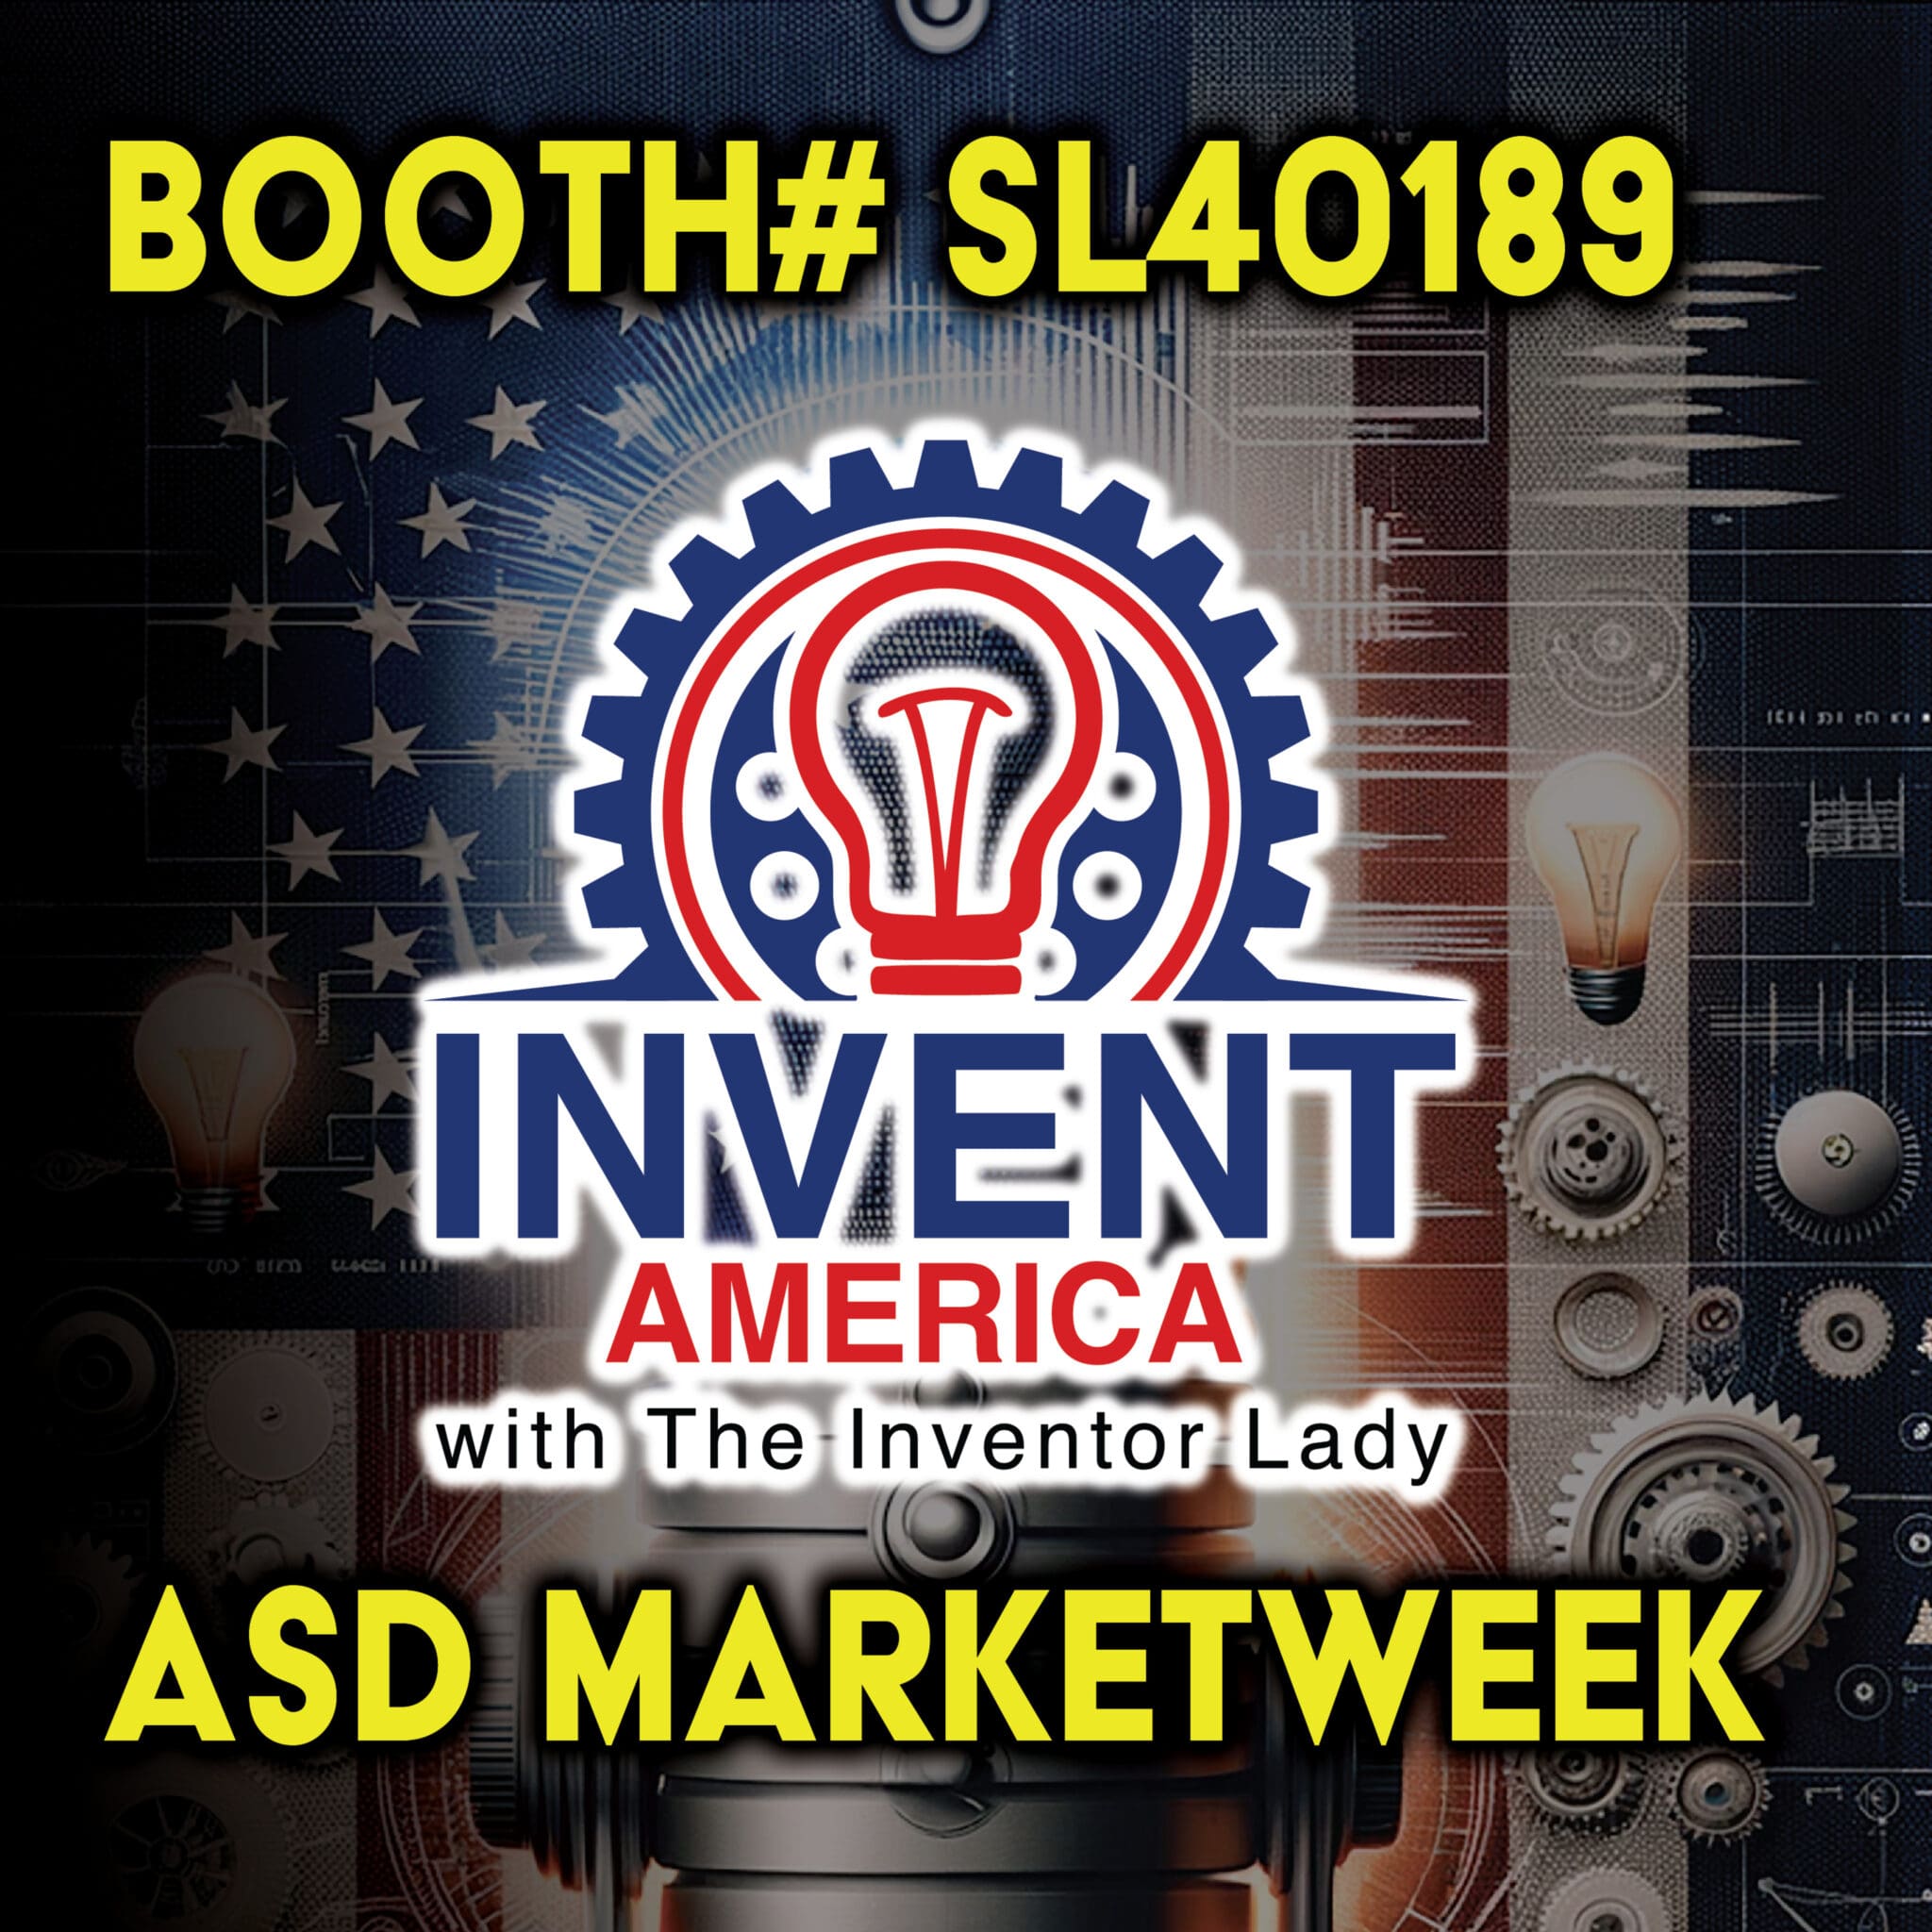 Invent America at ASD Marketweek